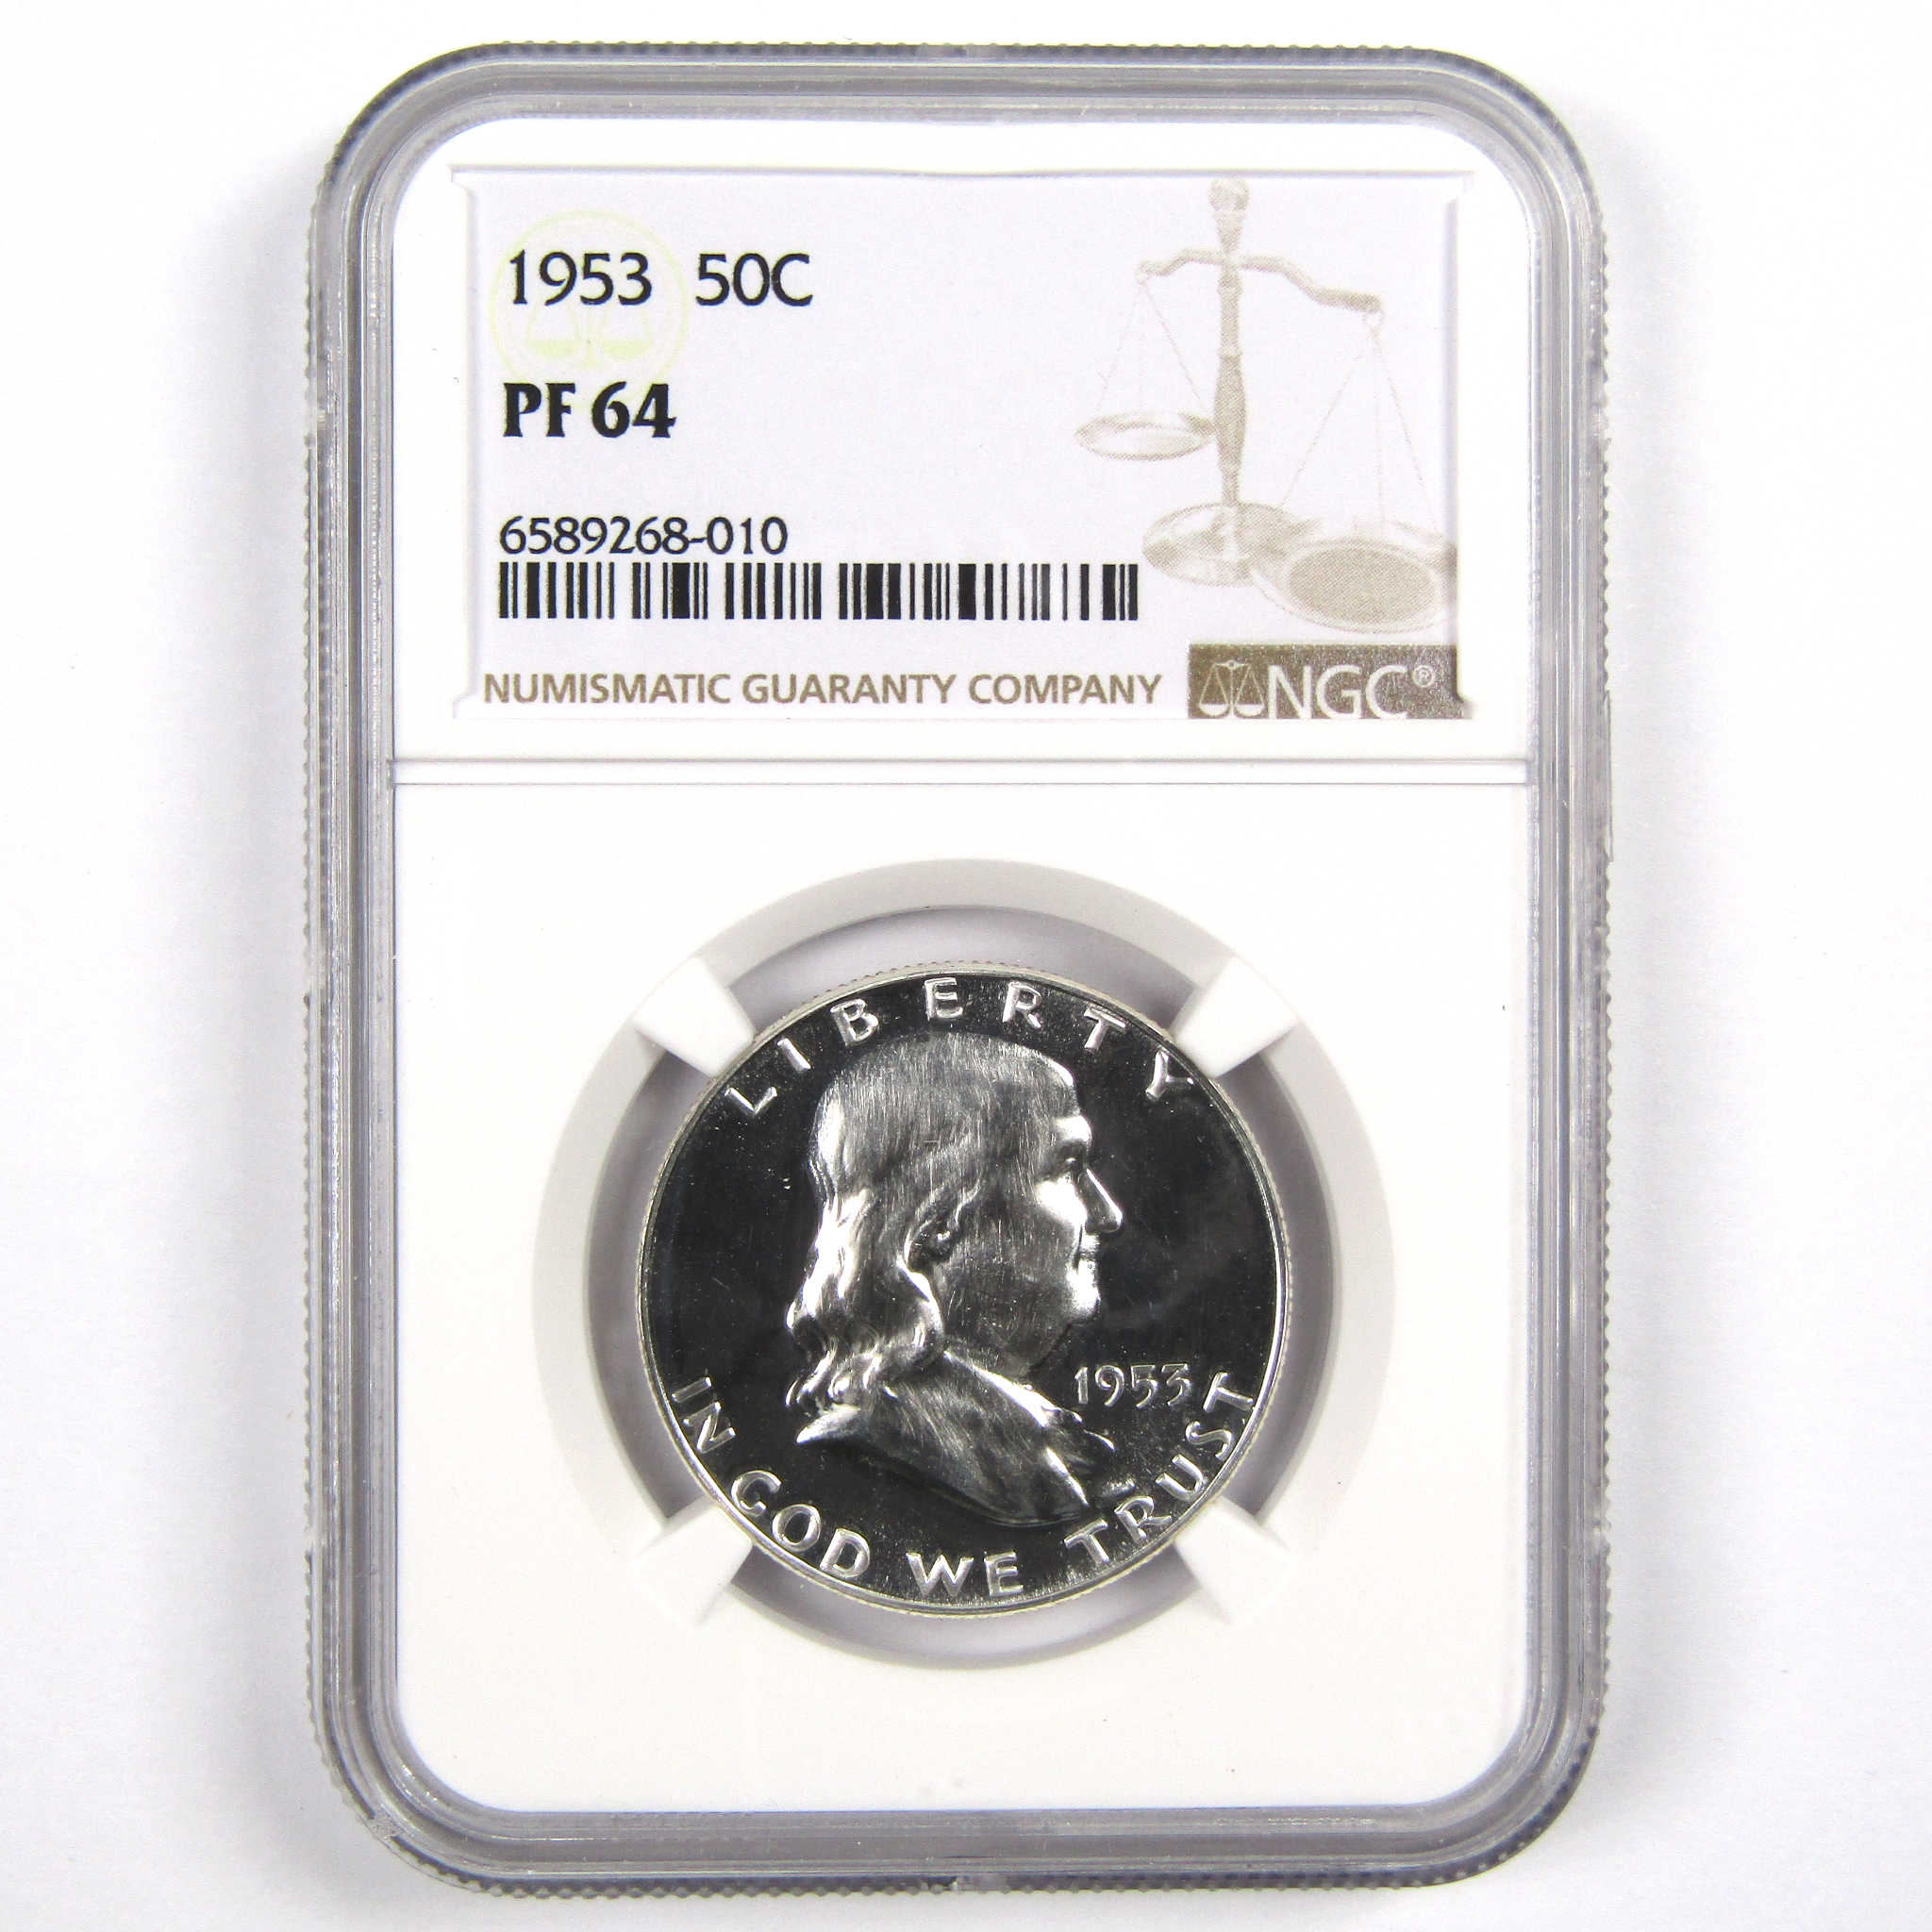 1953 Franklin Half Dollar PF 64 NGC 90% Silver 50c Proof SKU:I7932